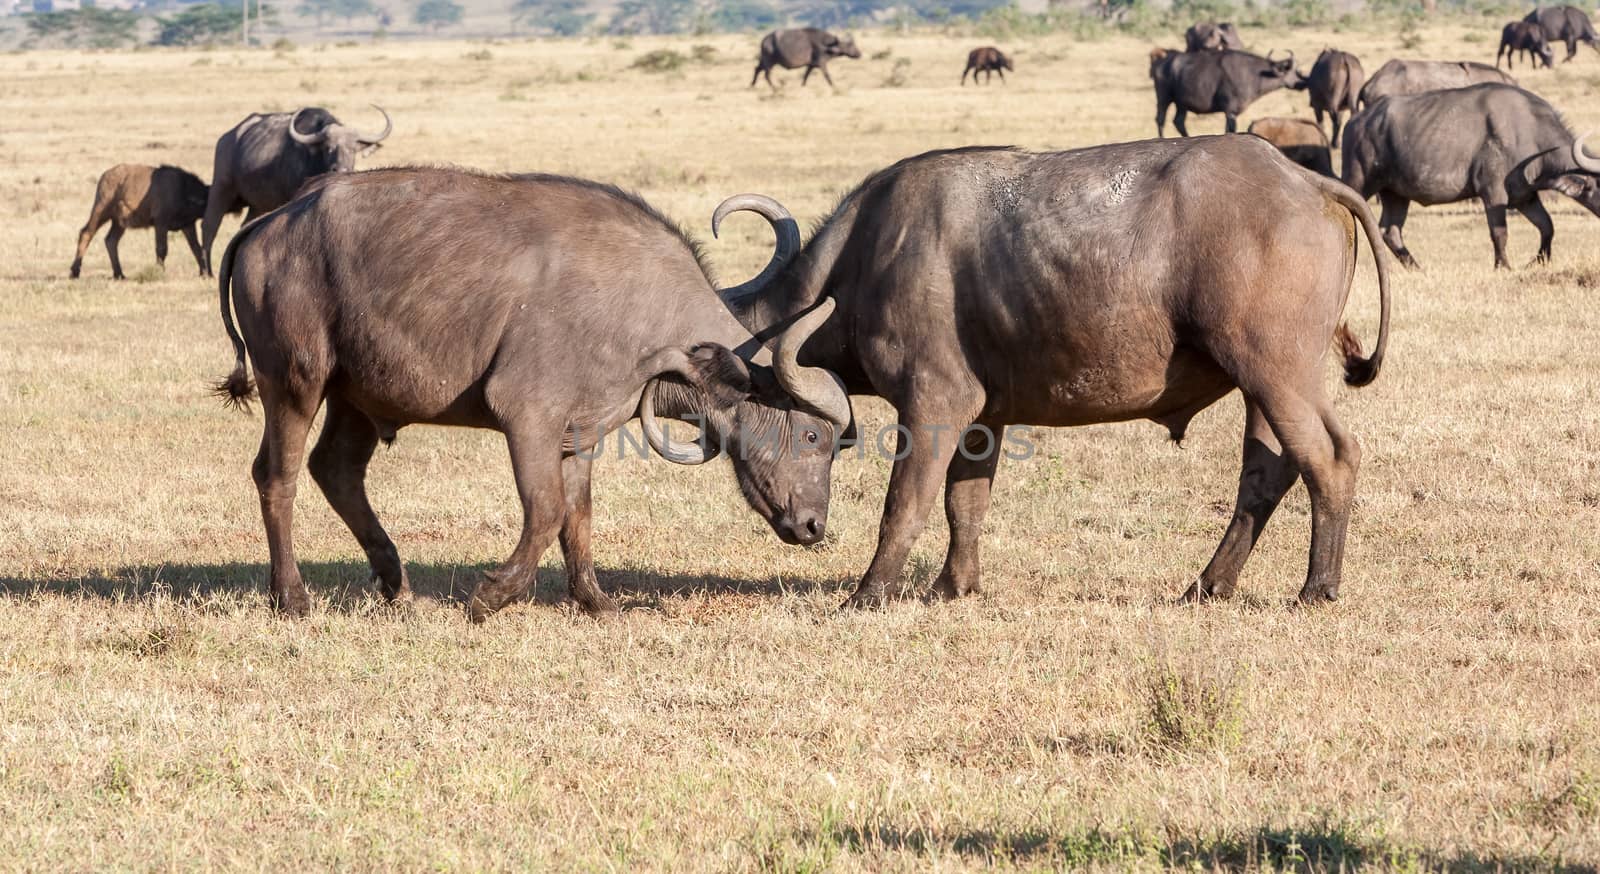 The wild  black African Buffalos in Kenya, Africa